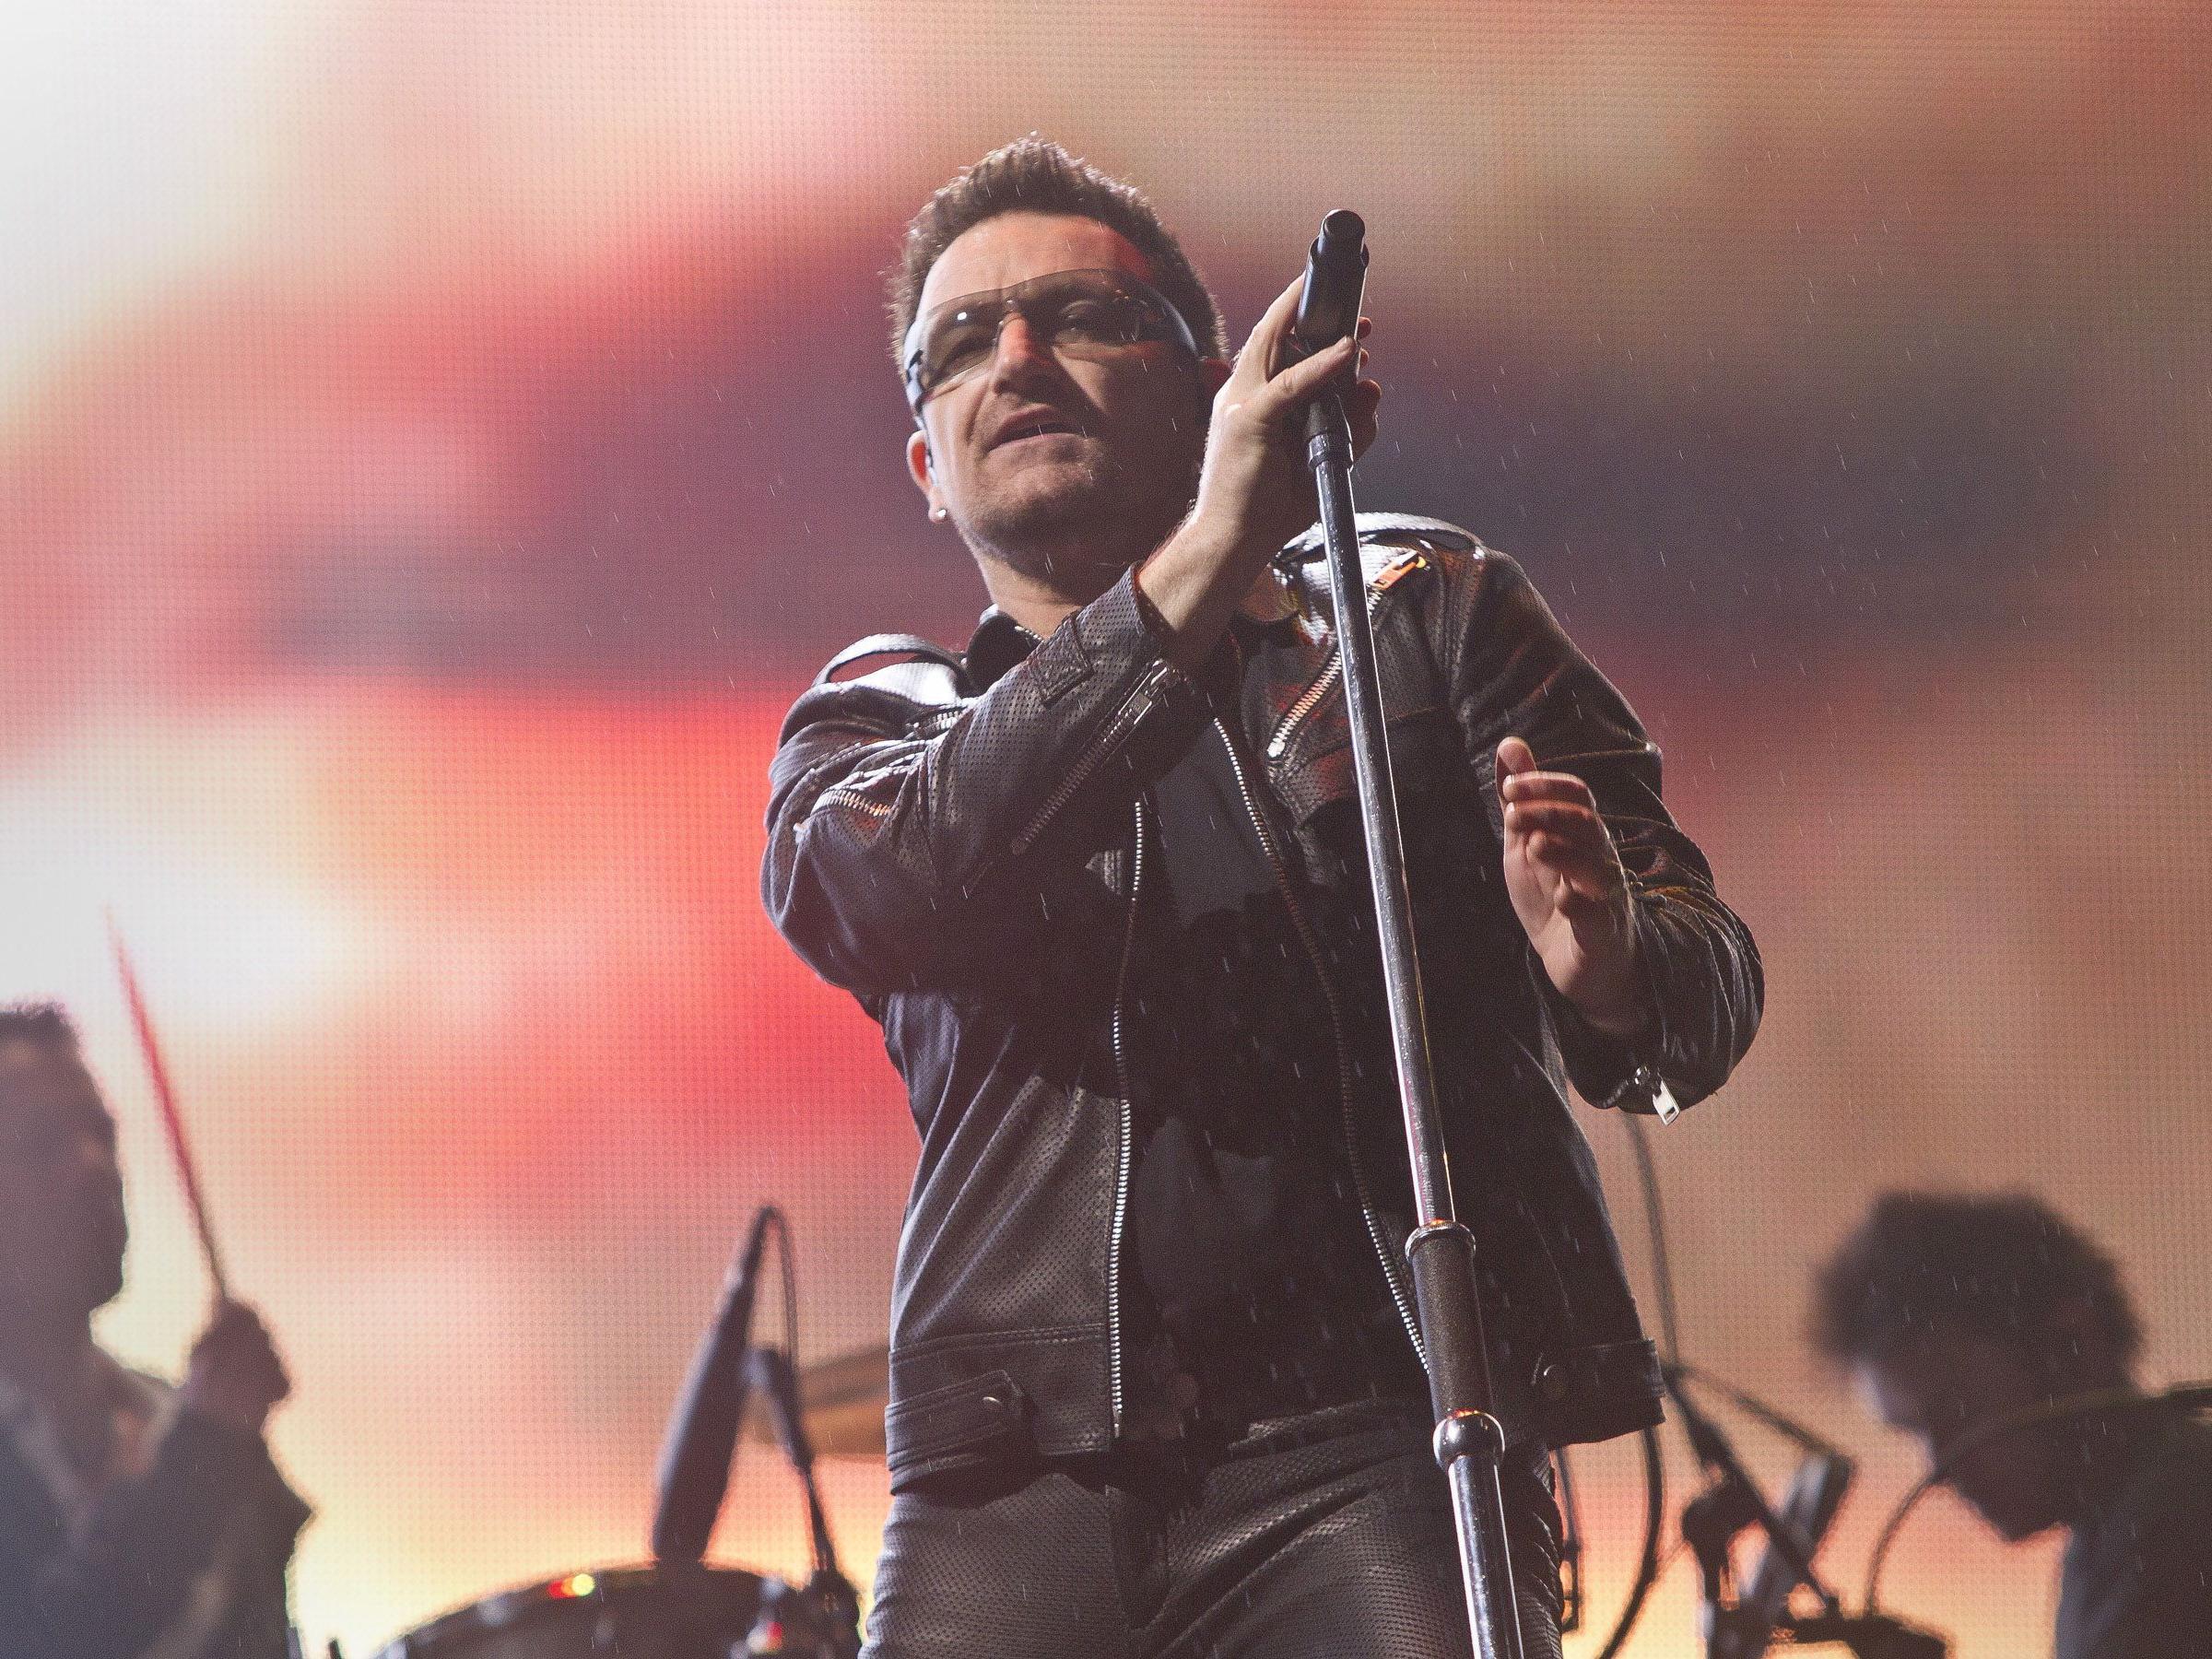 U2 geht nochmal mit "The Joshua Tree" auf Tour.